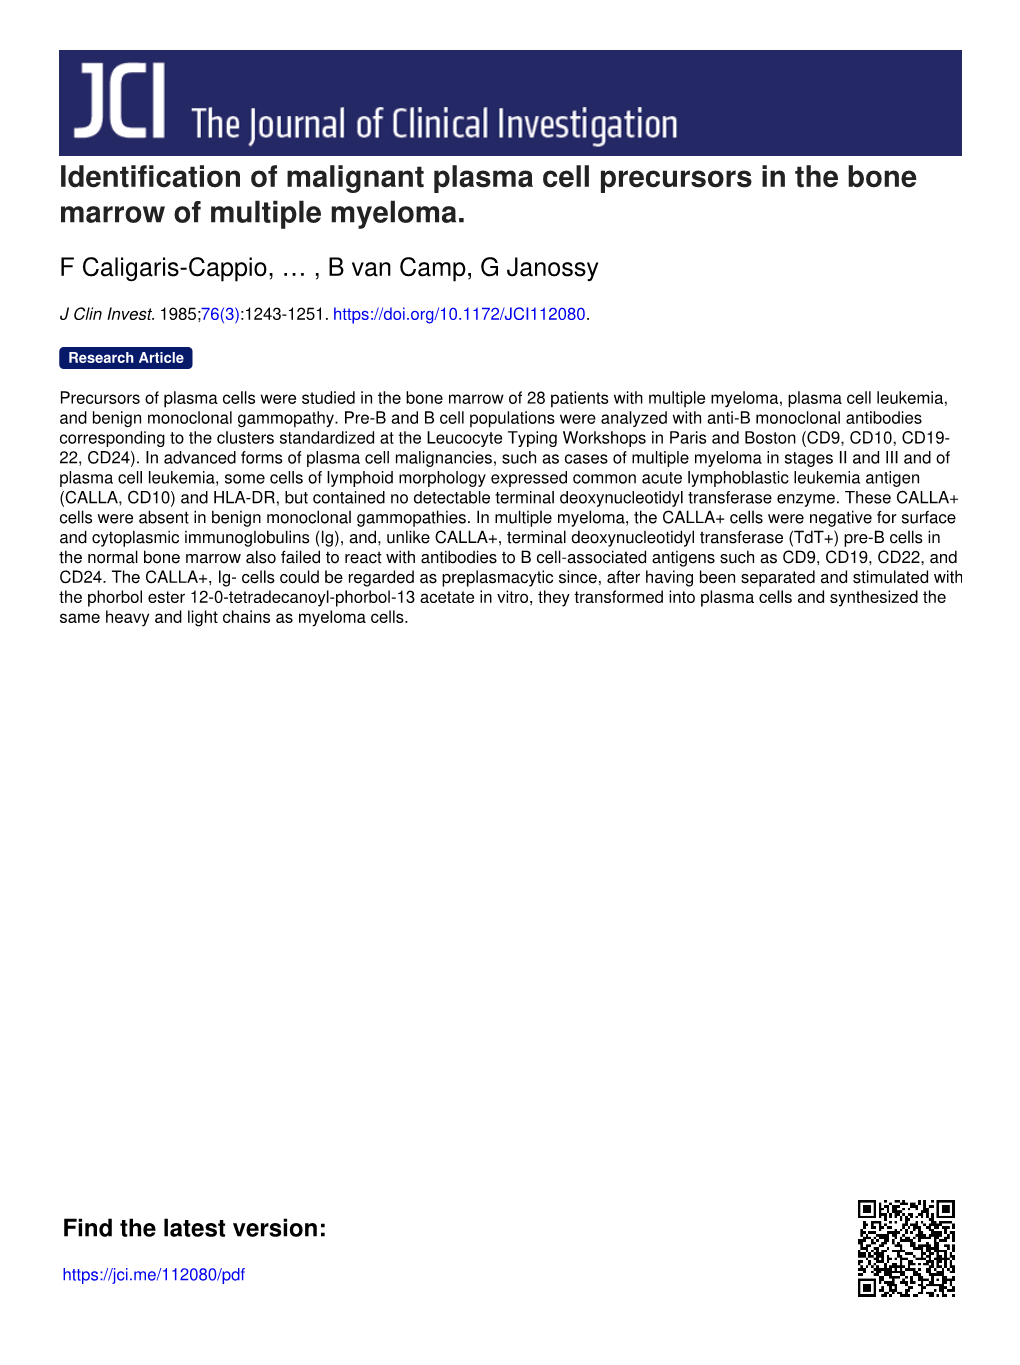 Identification of Malignant Plasma Cell Precursors in the Bone Marrow of Multiple Myeloma